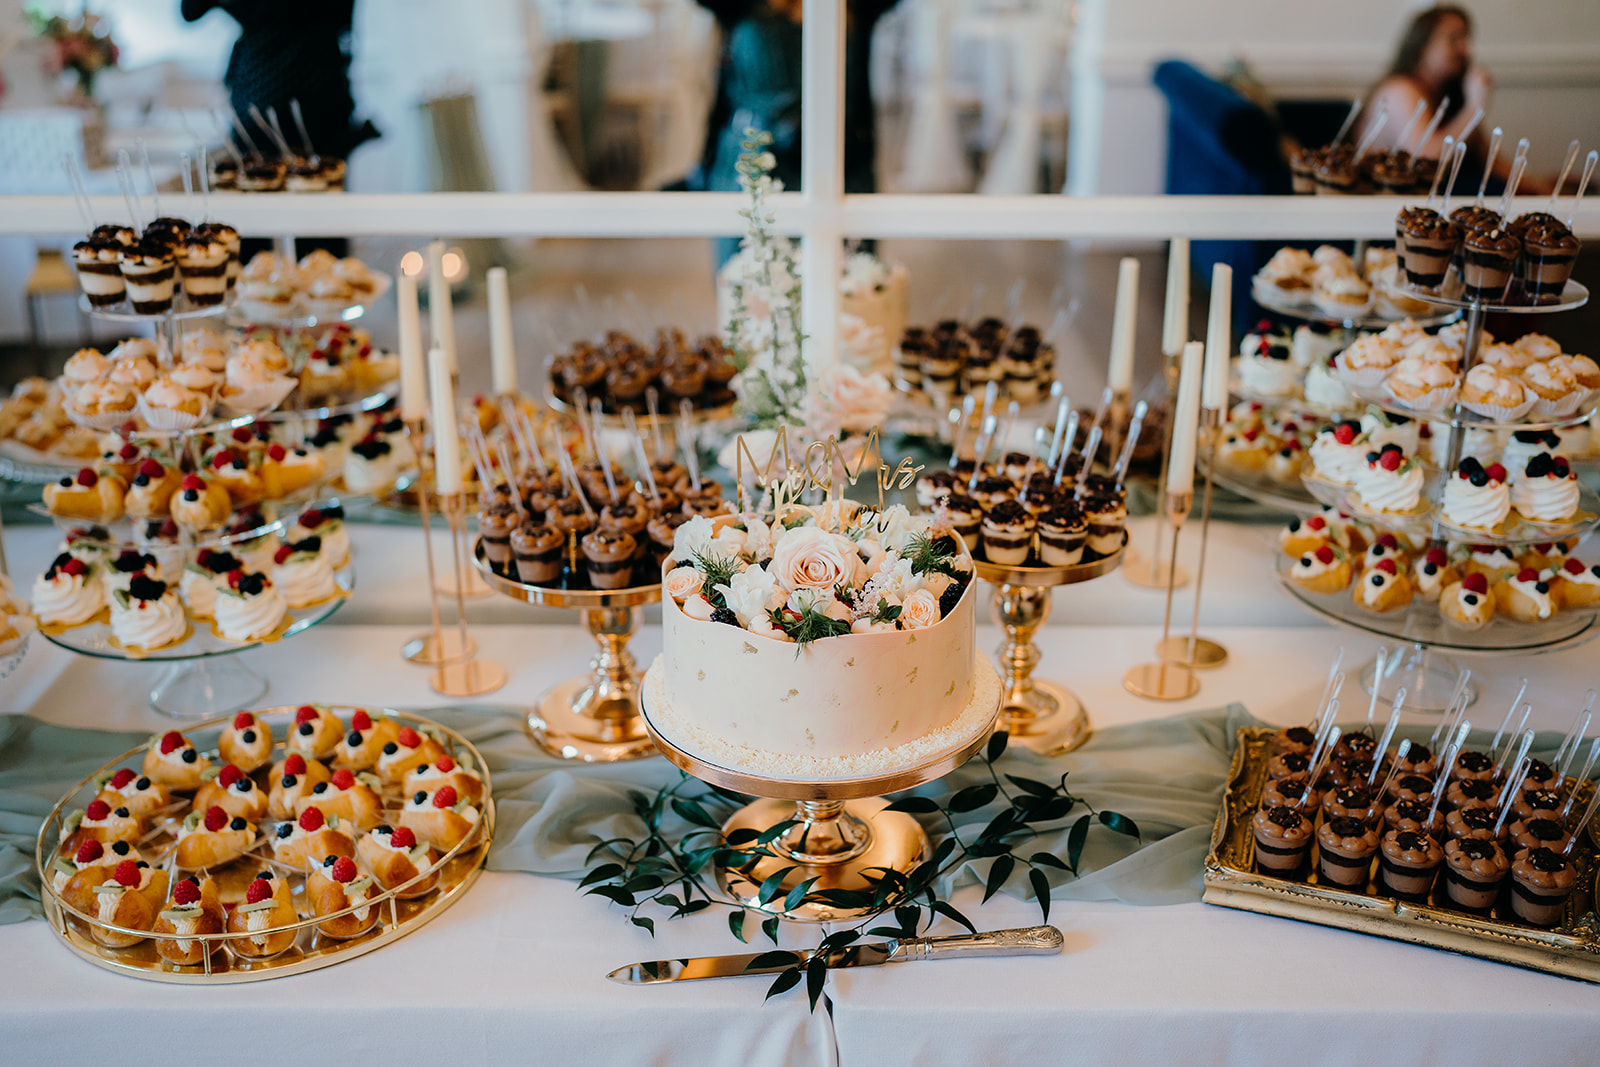 Desert table and wedding cake